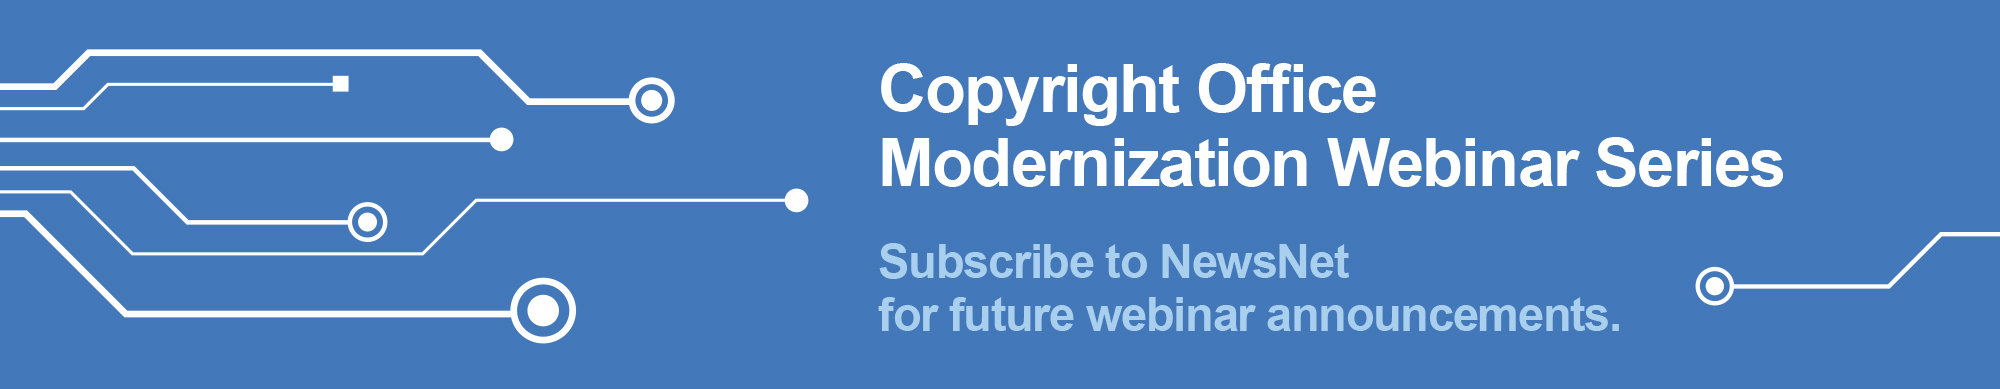 Copyright Modernization Webinar Series. Subscribe to NewsNets for future webinar announcements.